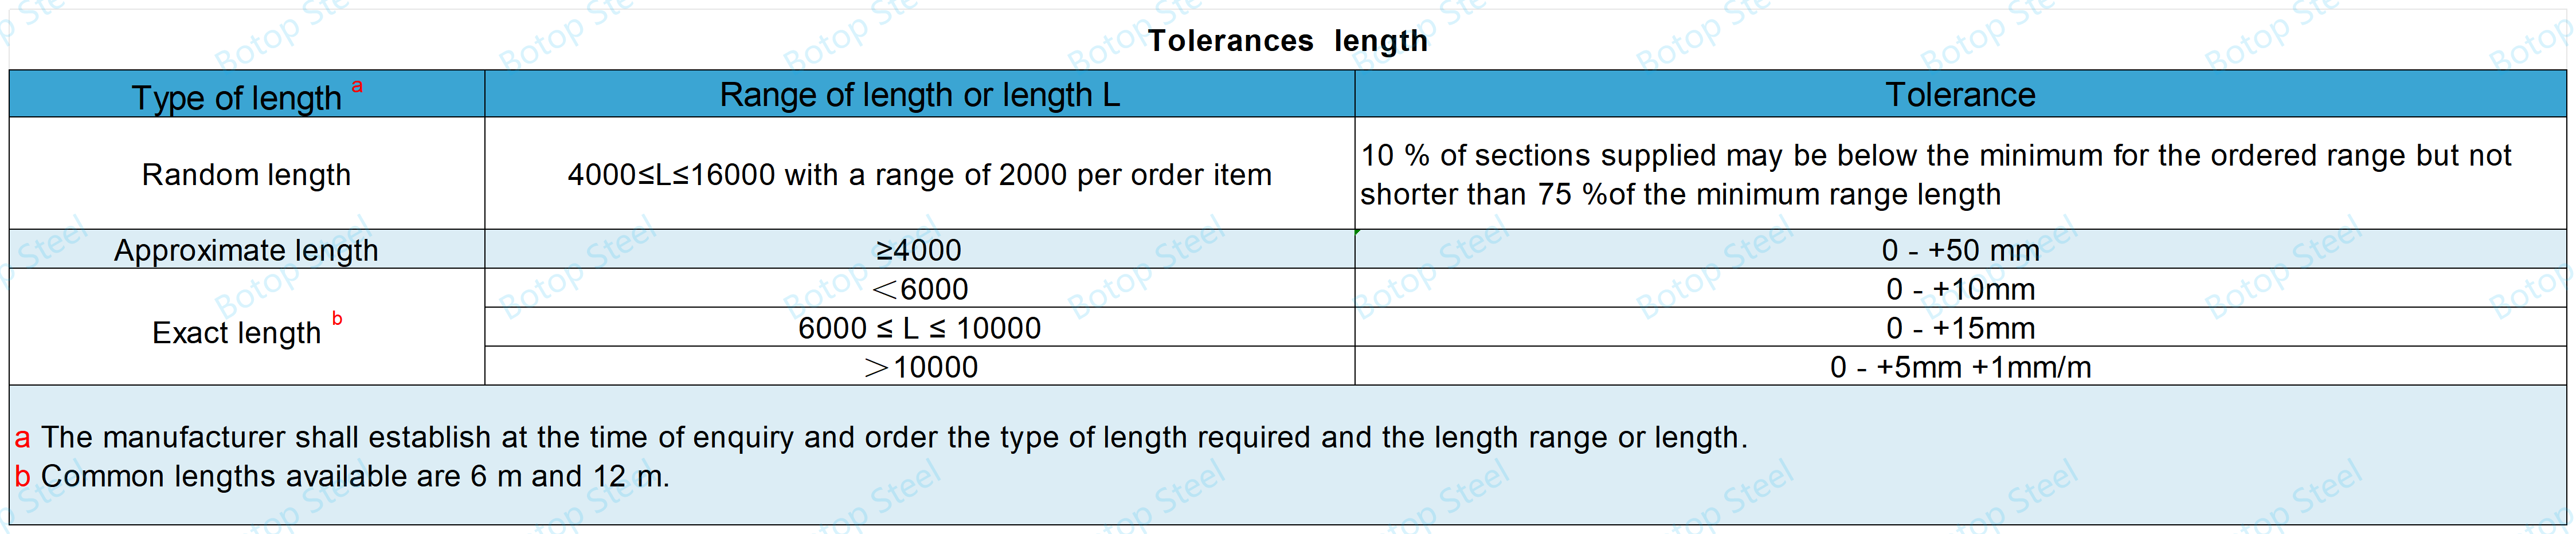 BS EN 10219 Tolerances  length